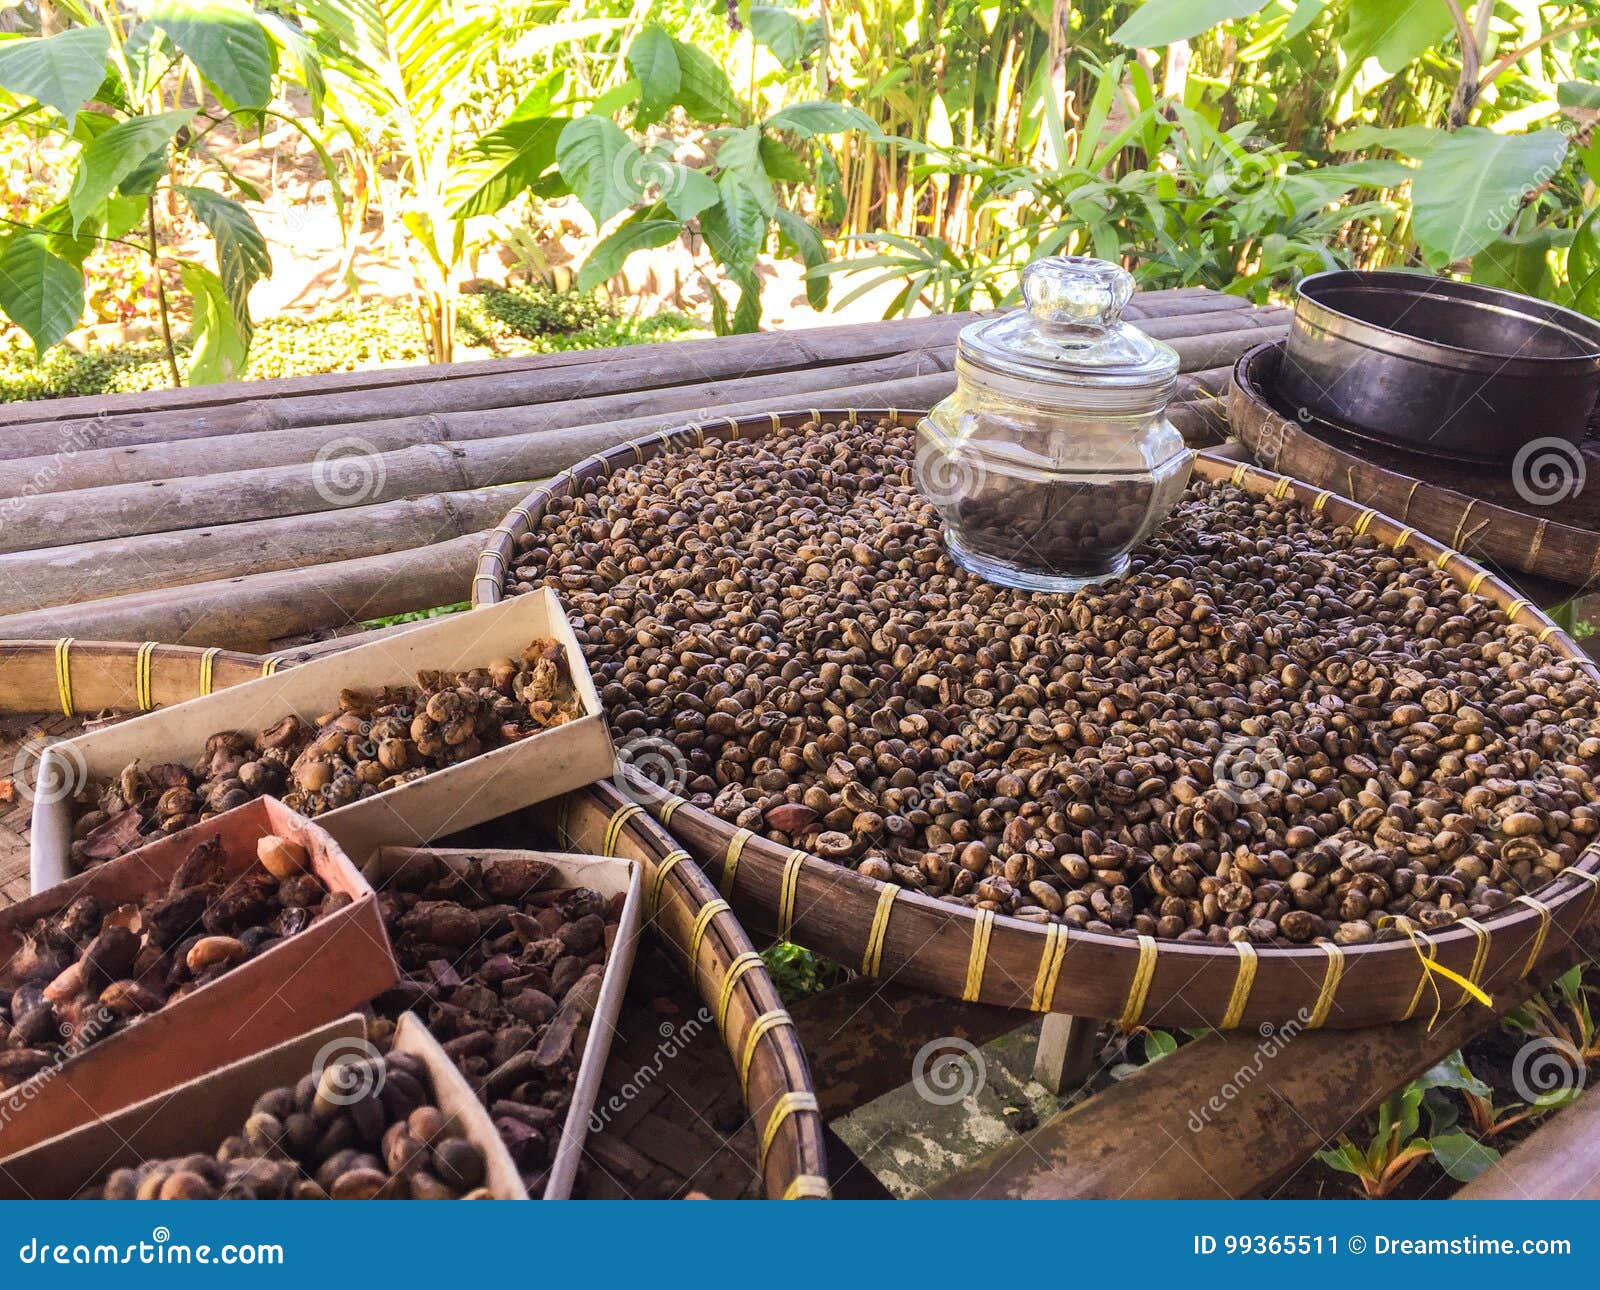 Kopi Luwak Coffee Beans - Bali Stock Image - Image of lives, captures:  99365511